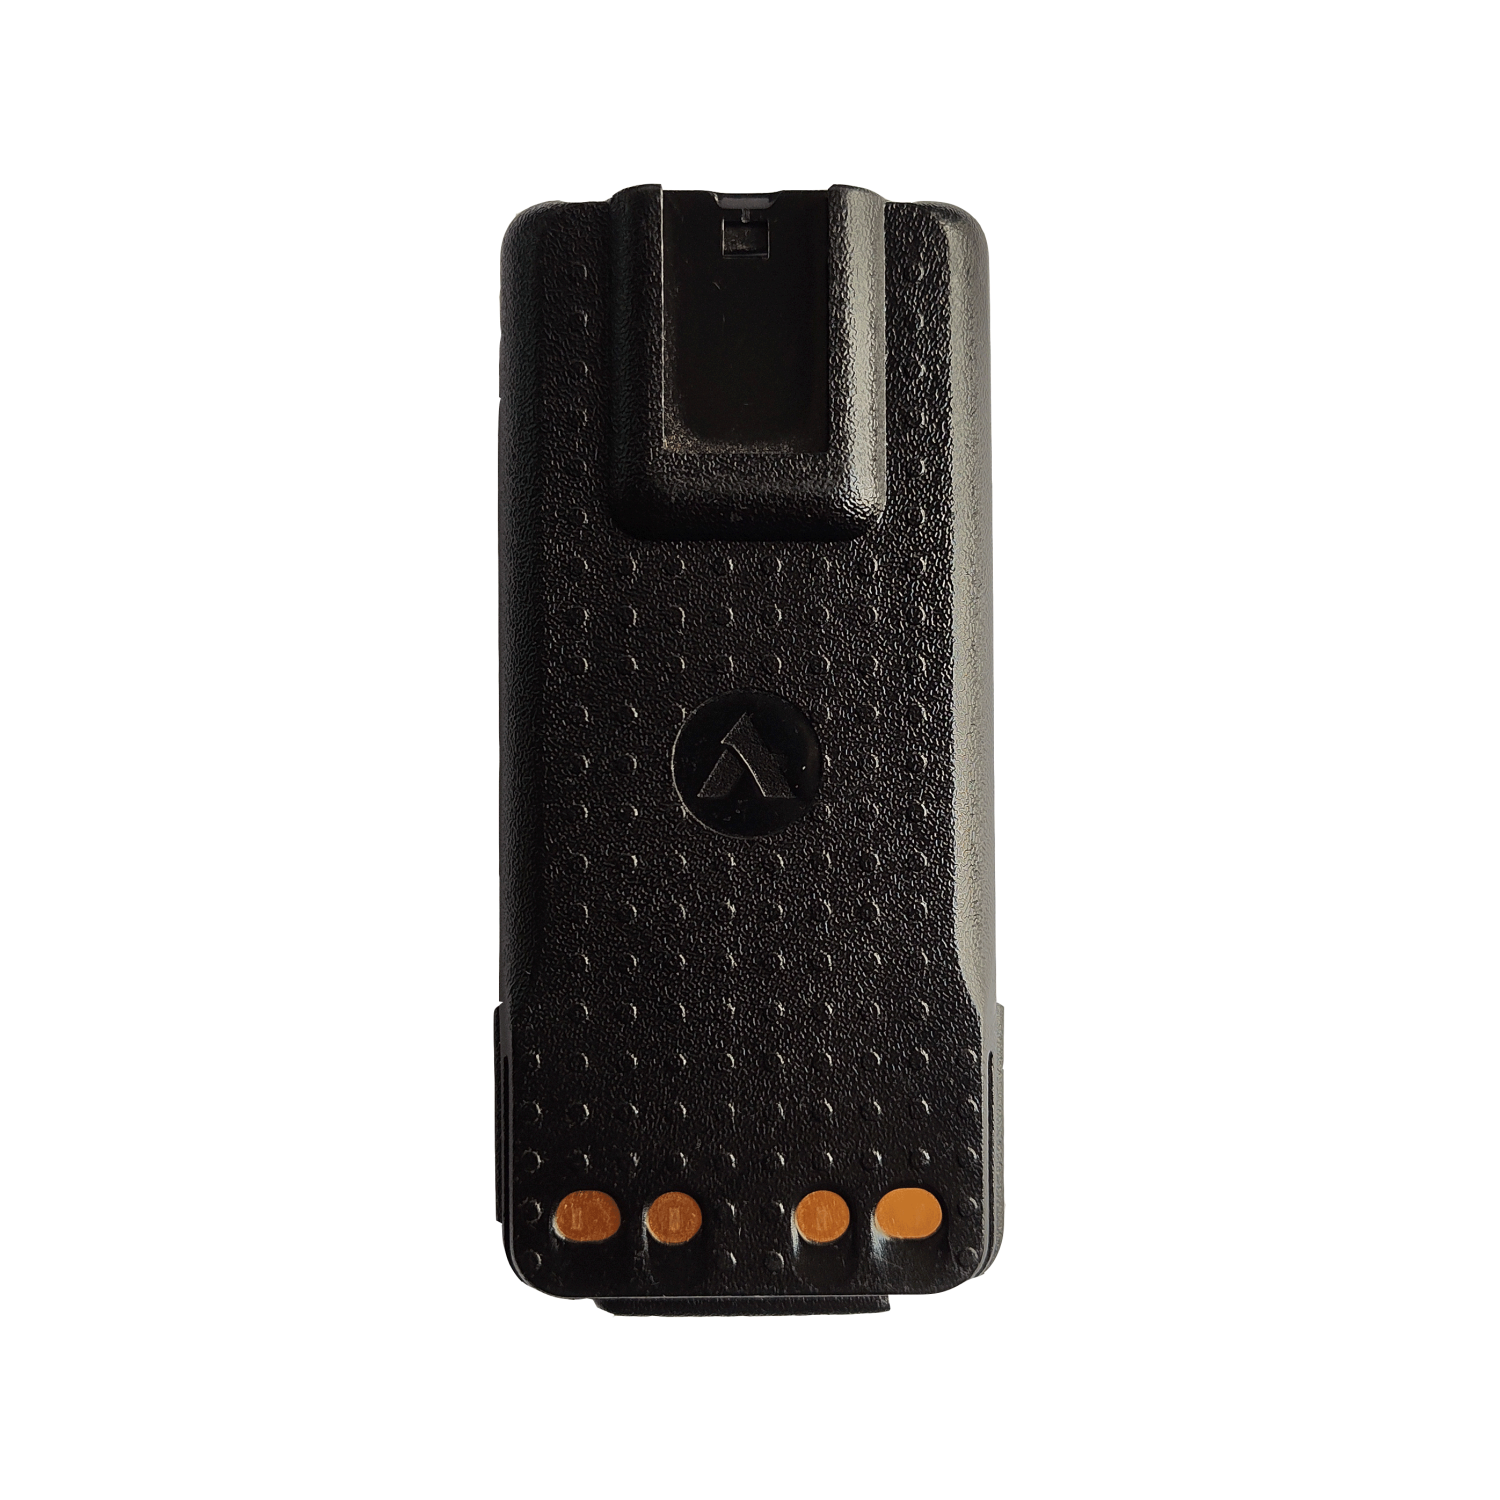 Аккумулятор Agent APLI4493C31 для радиостанций Motorola серий DP4xxx, DP2xxx APLI4493C31 3100 А·ч